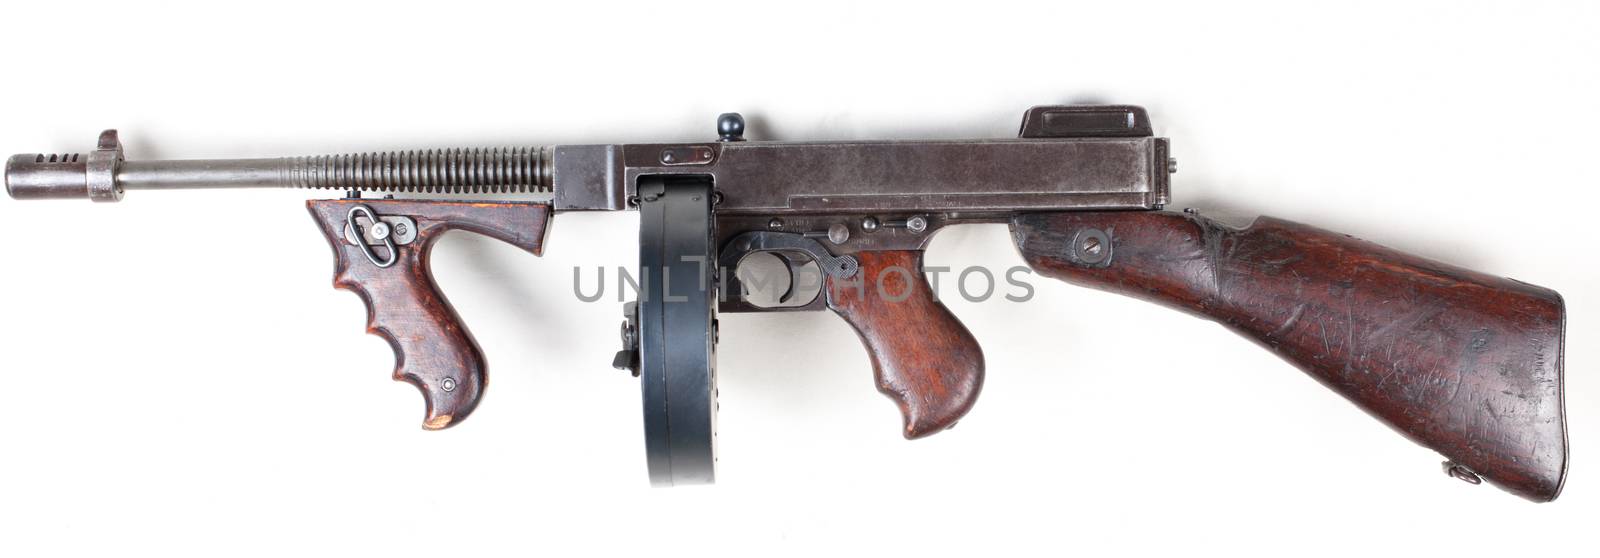 old mashine gun by orcearo